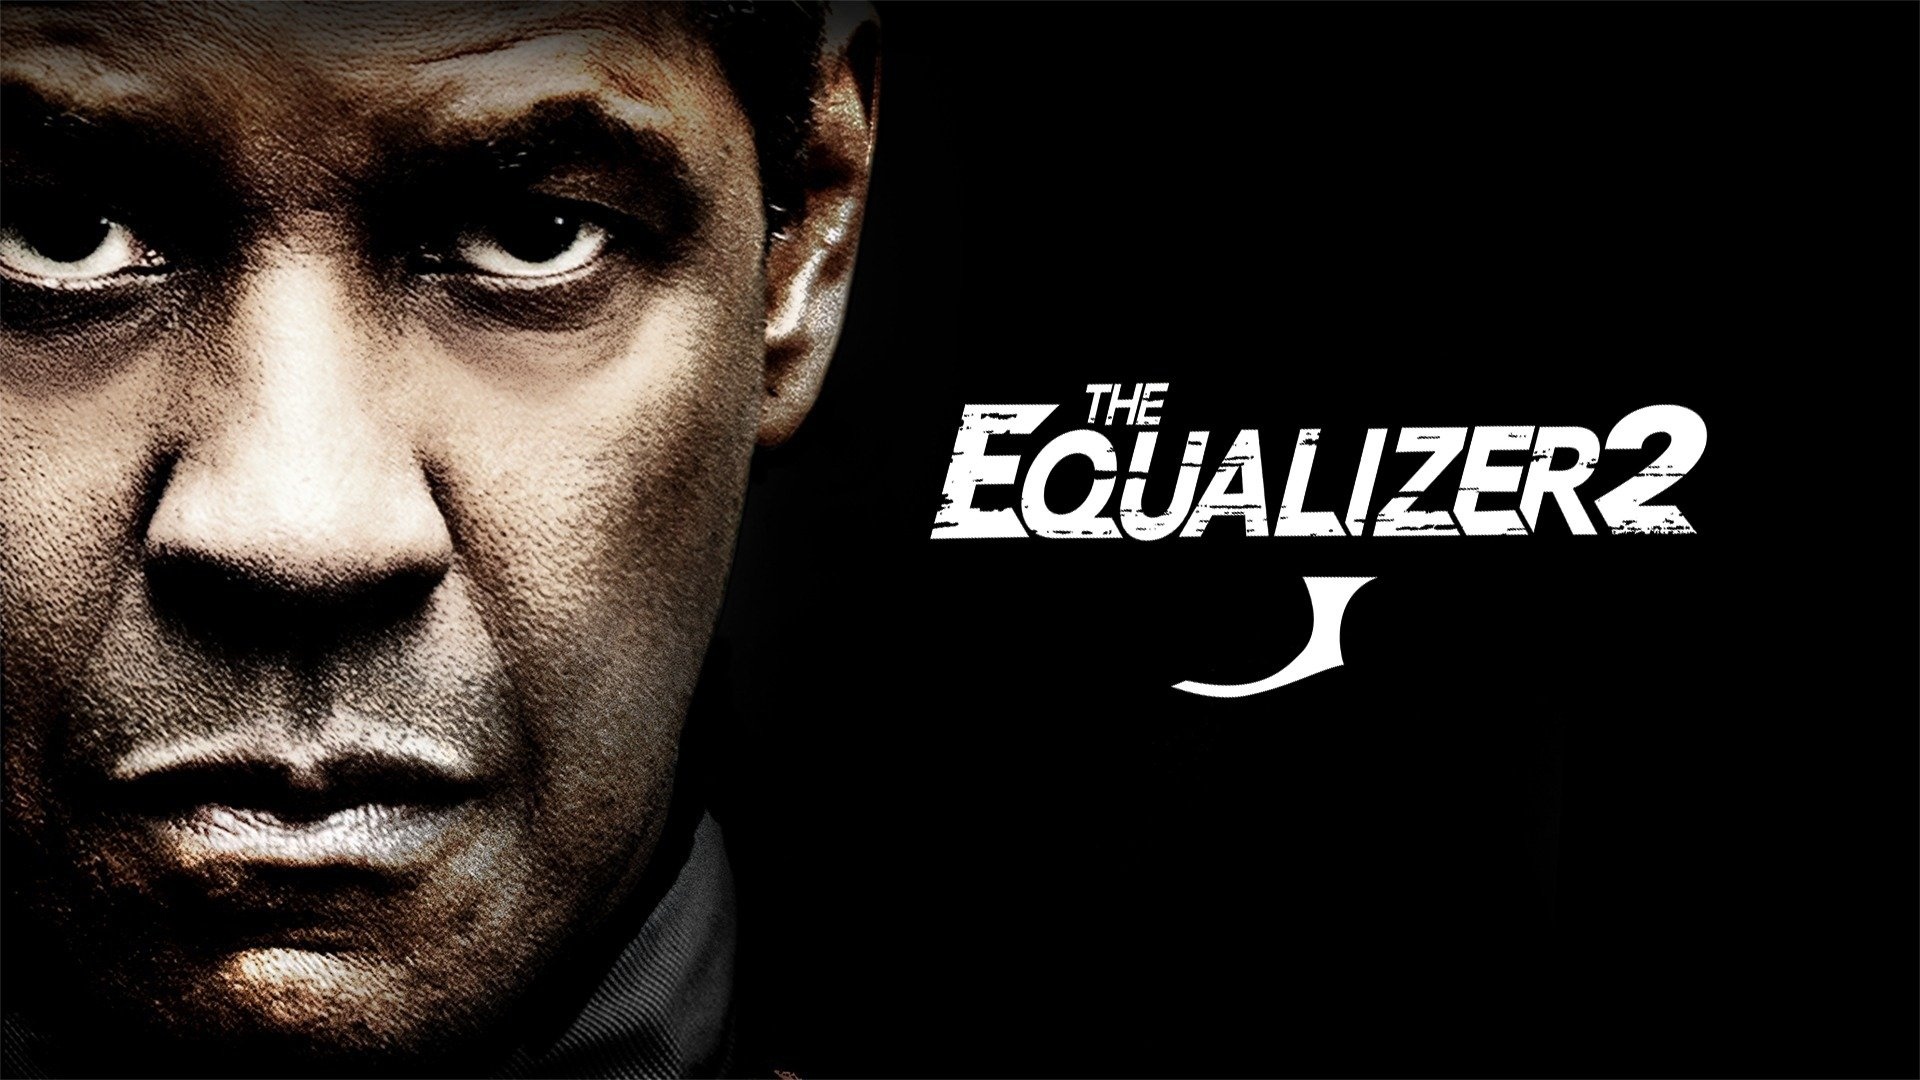 The Equalizer 2, Watch full movie, Online, Plex, 1920x1080 Full HD Desktop